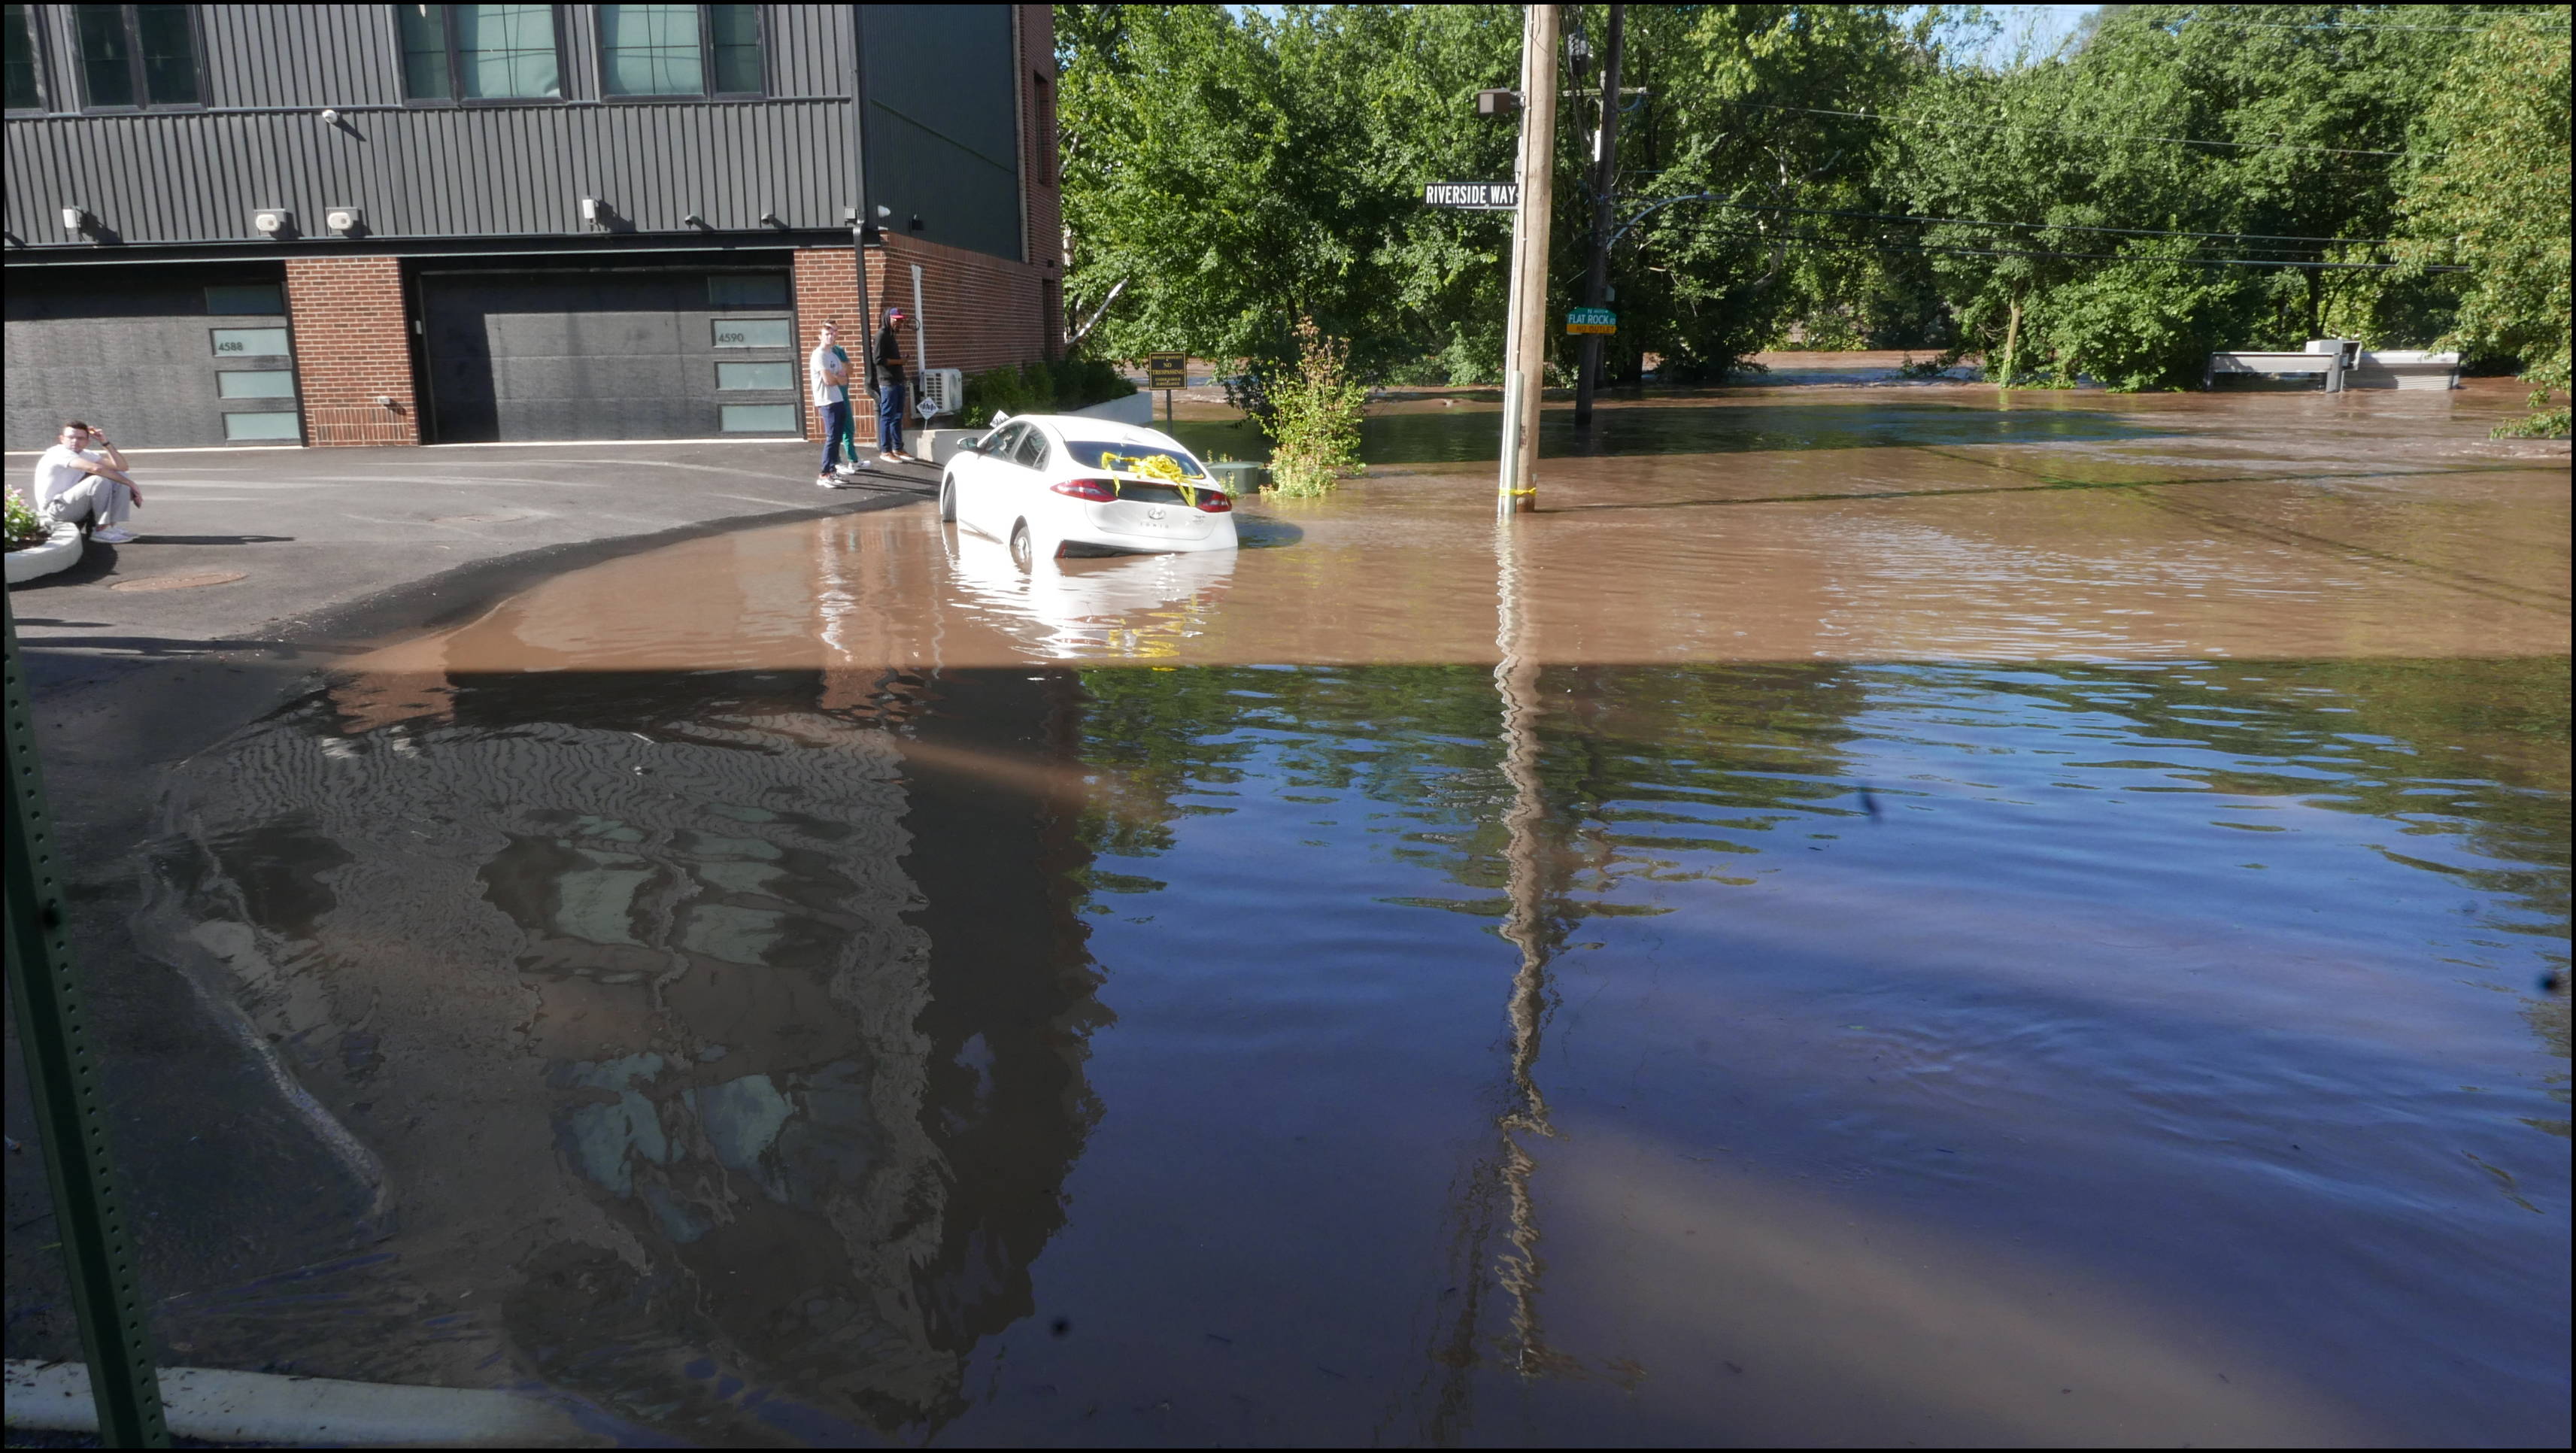 The Locks development -- Flooded car blocking the entrance.